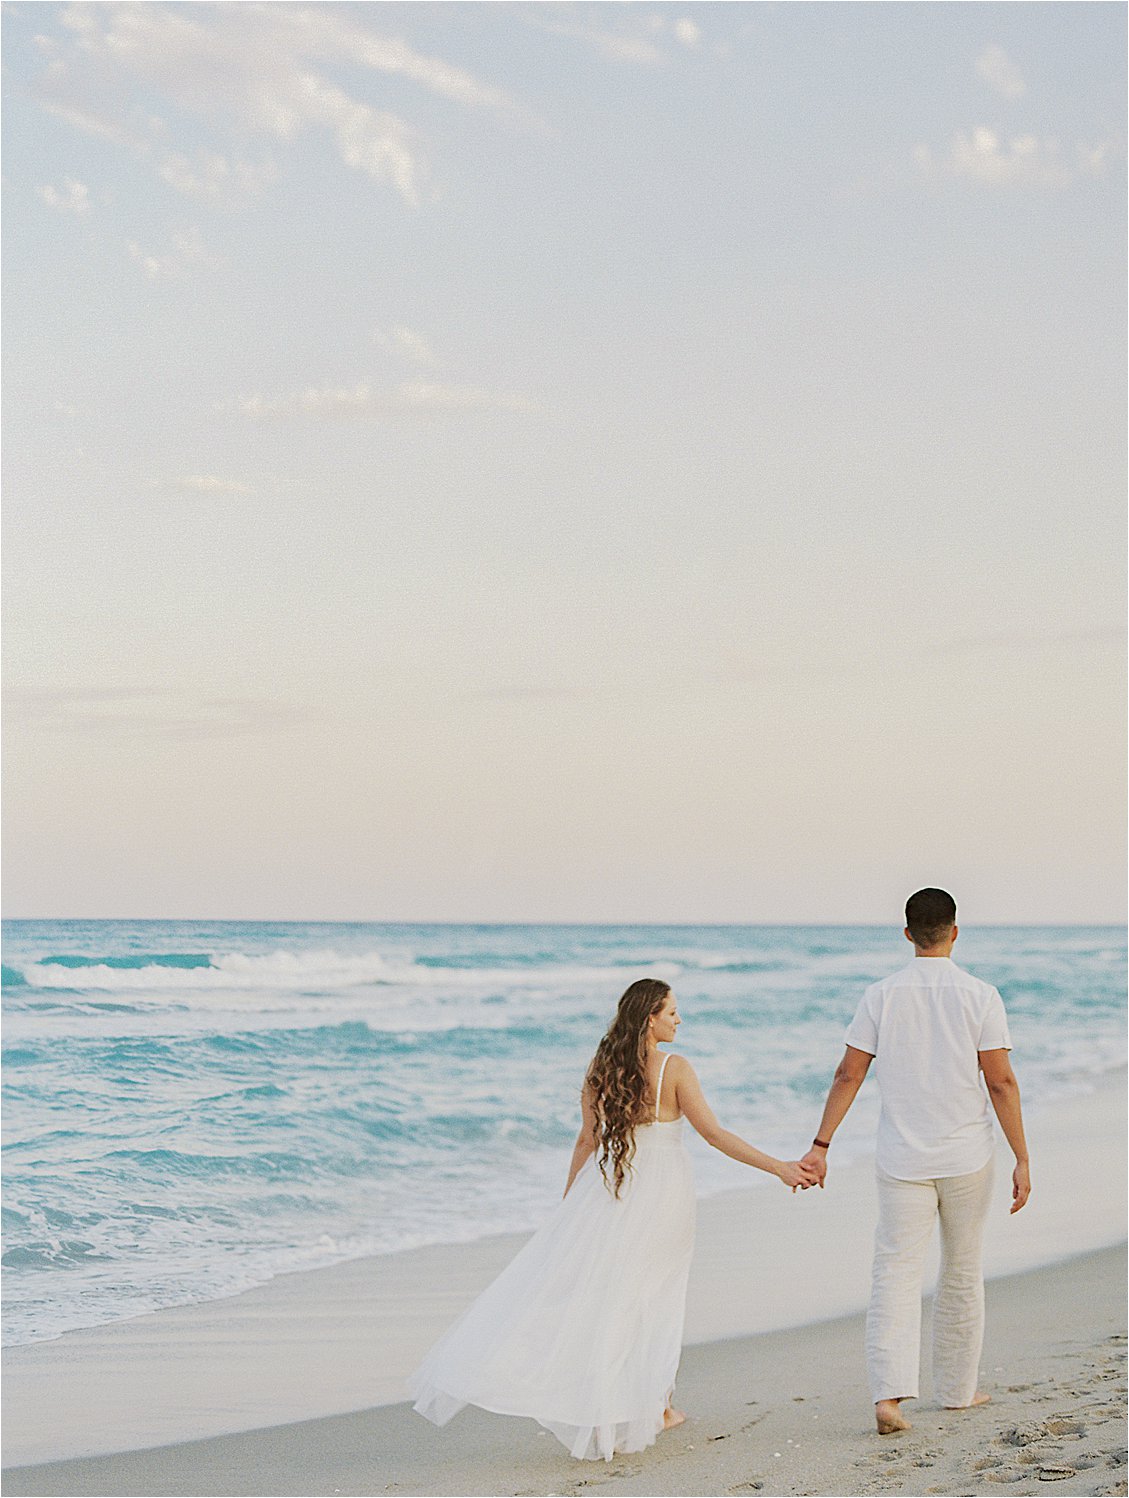 Long walks on the beach with film wedding photographer, Renee Hollingshead